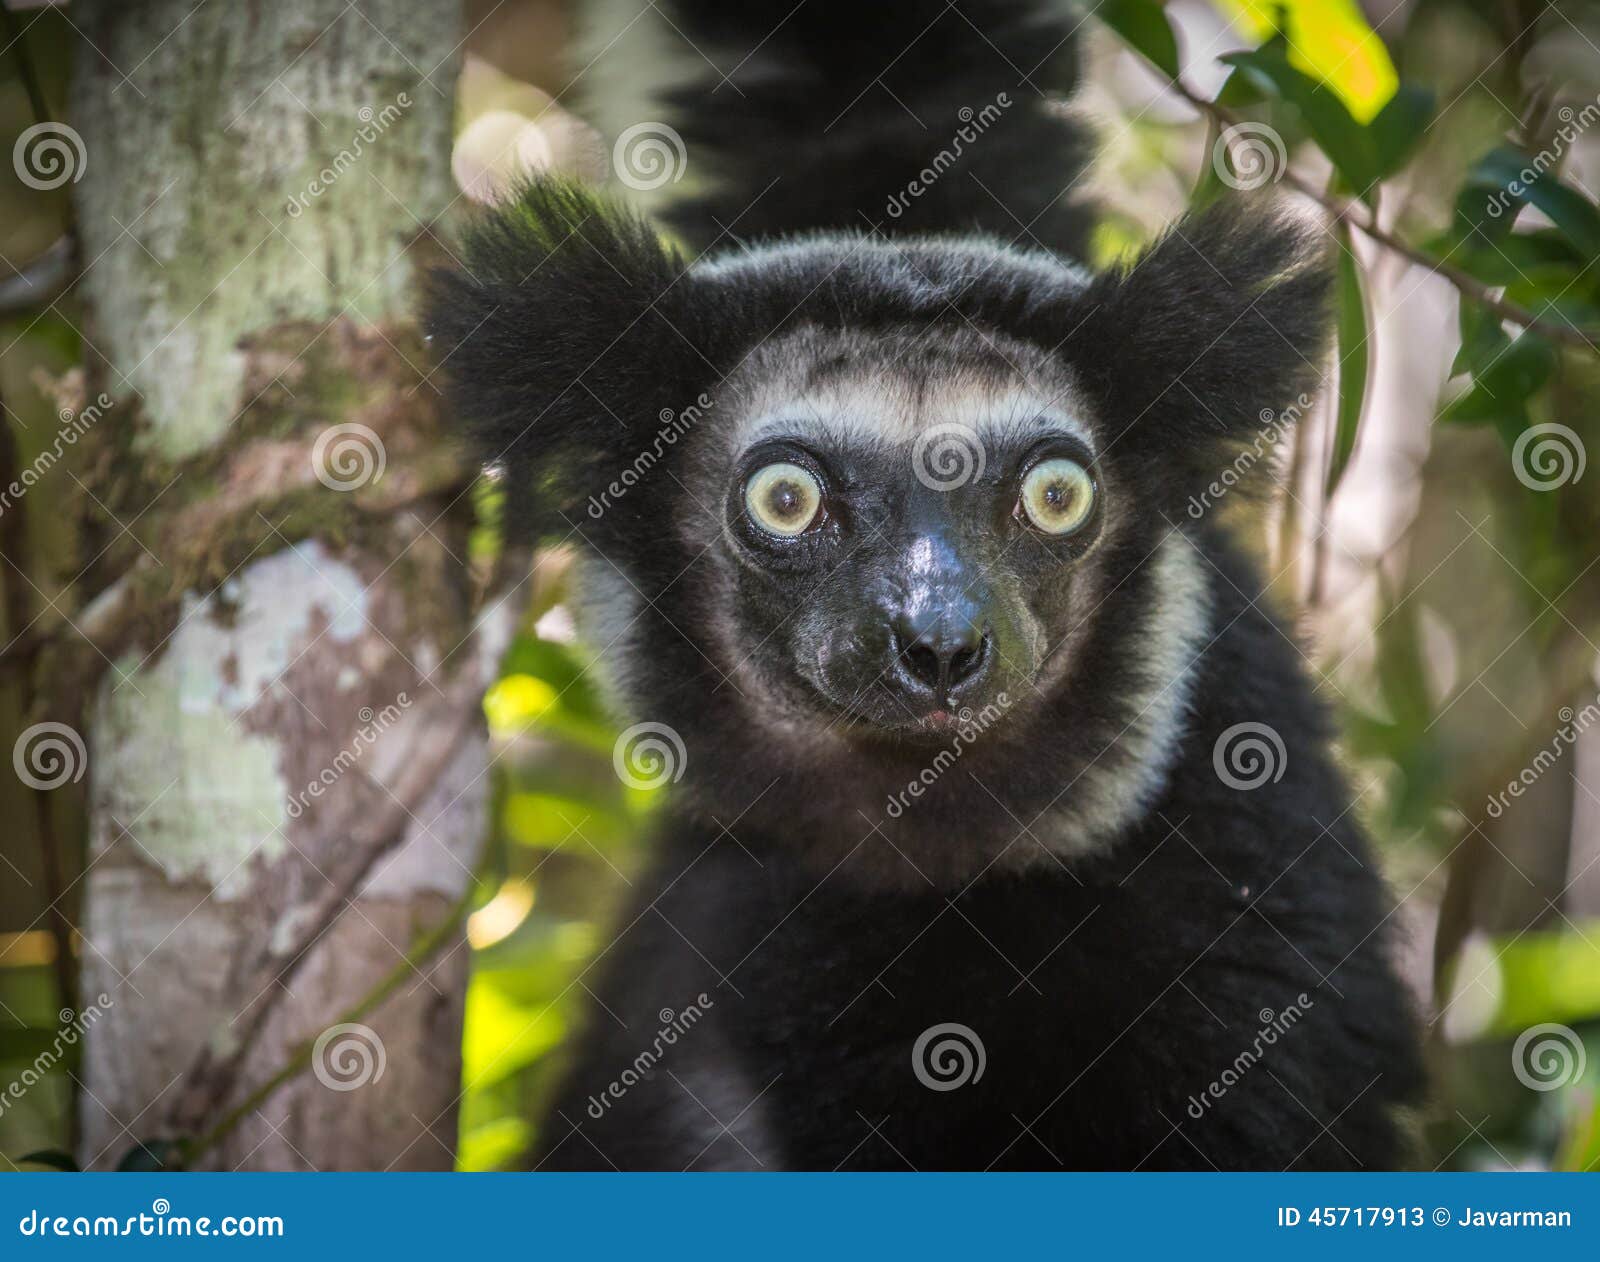 indri, the largest lemur of madagascar